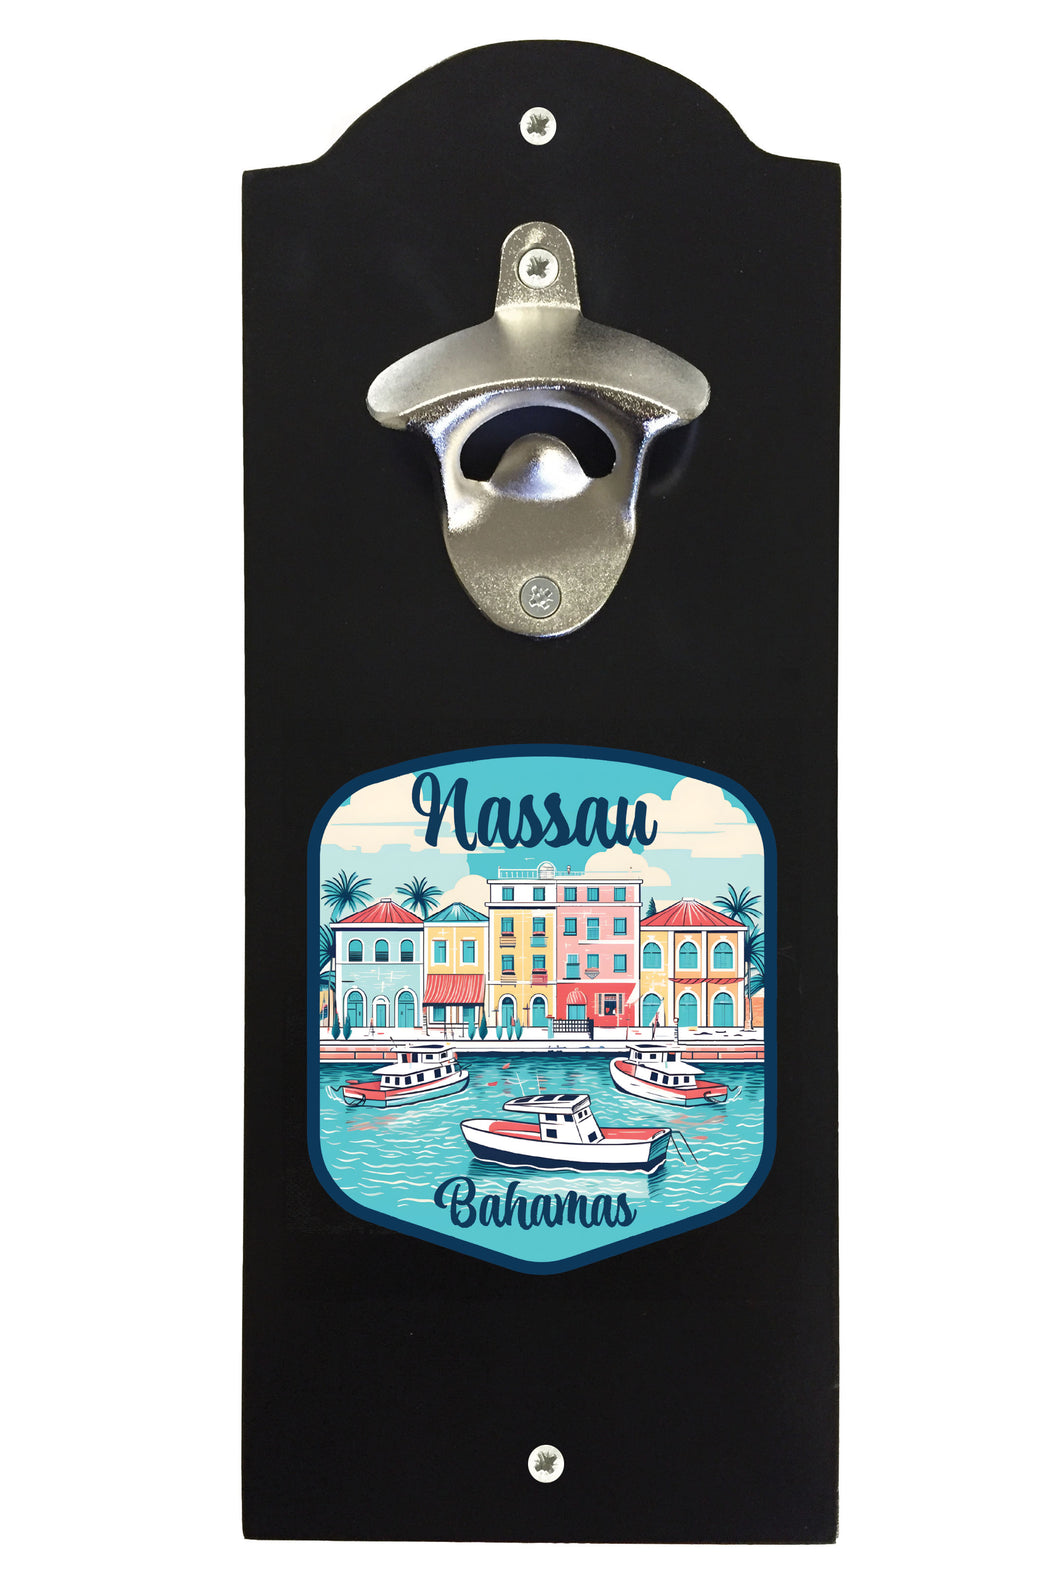 Nassau  the Bahamas Design C Souvenir  Wall mounted bottle opener